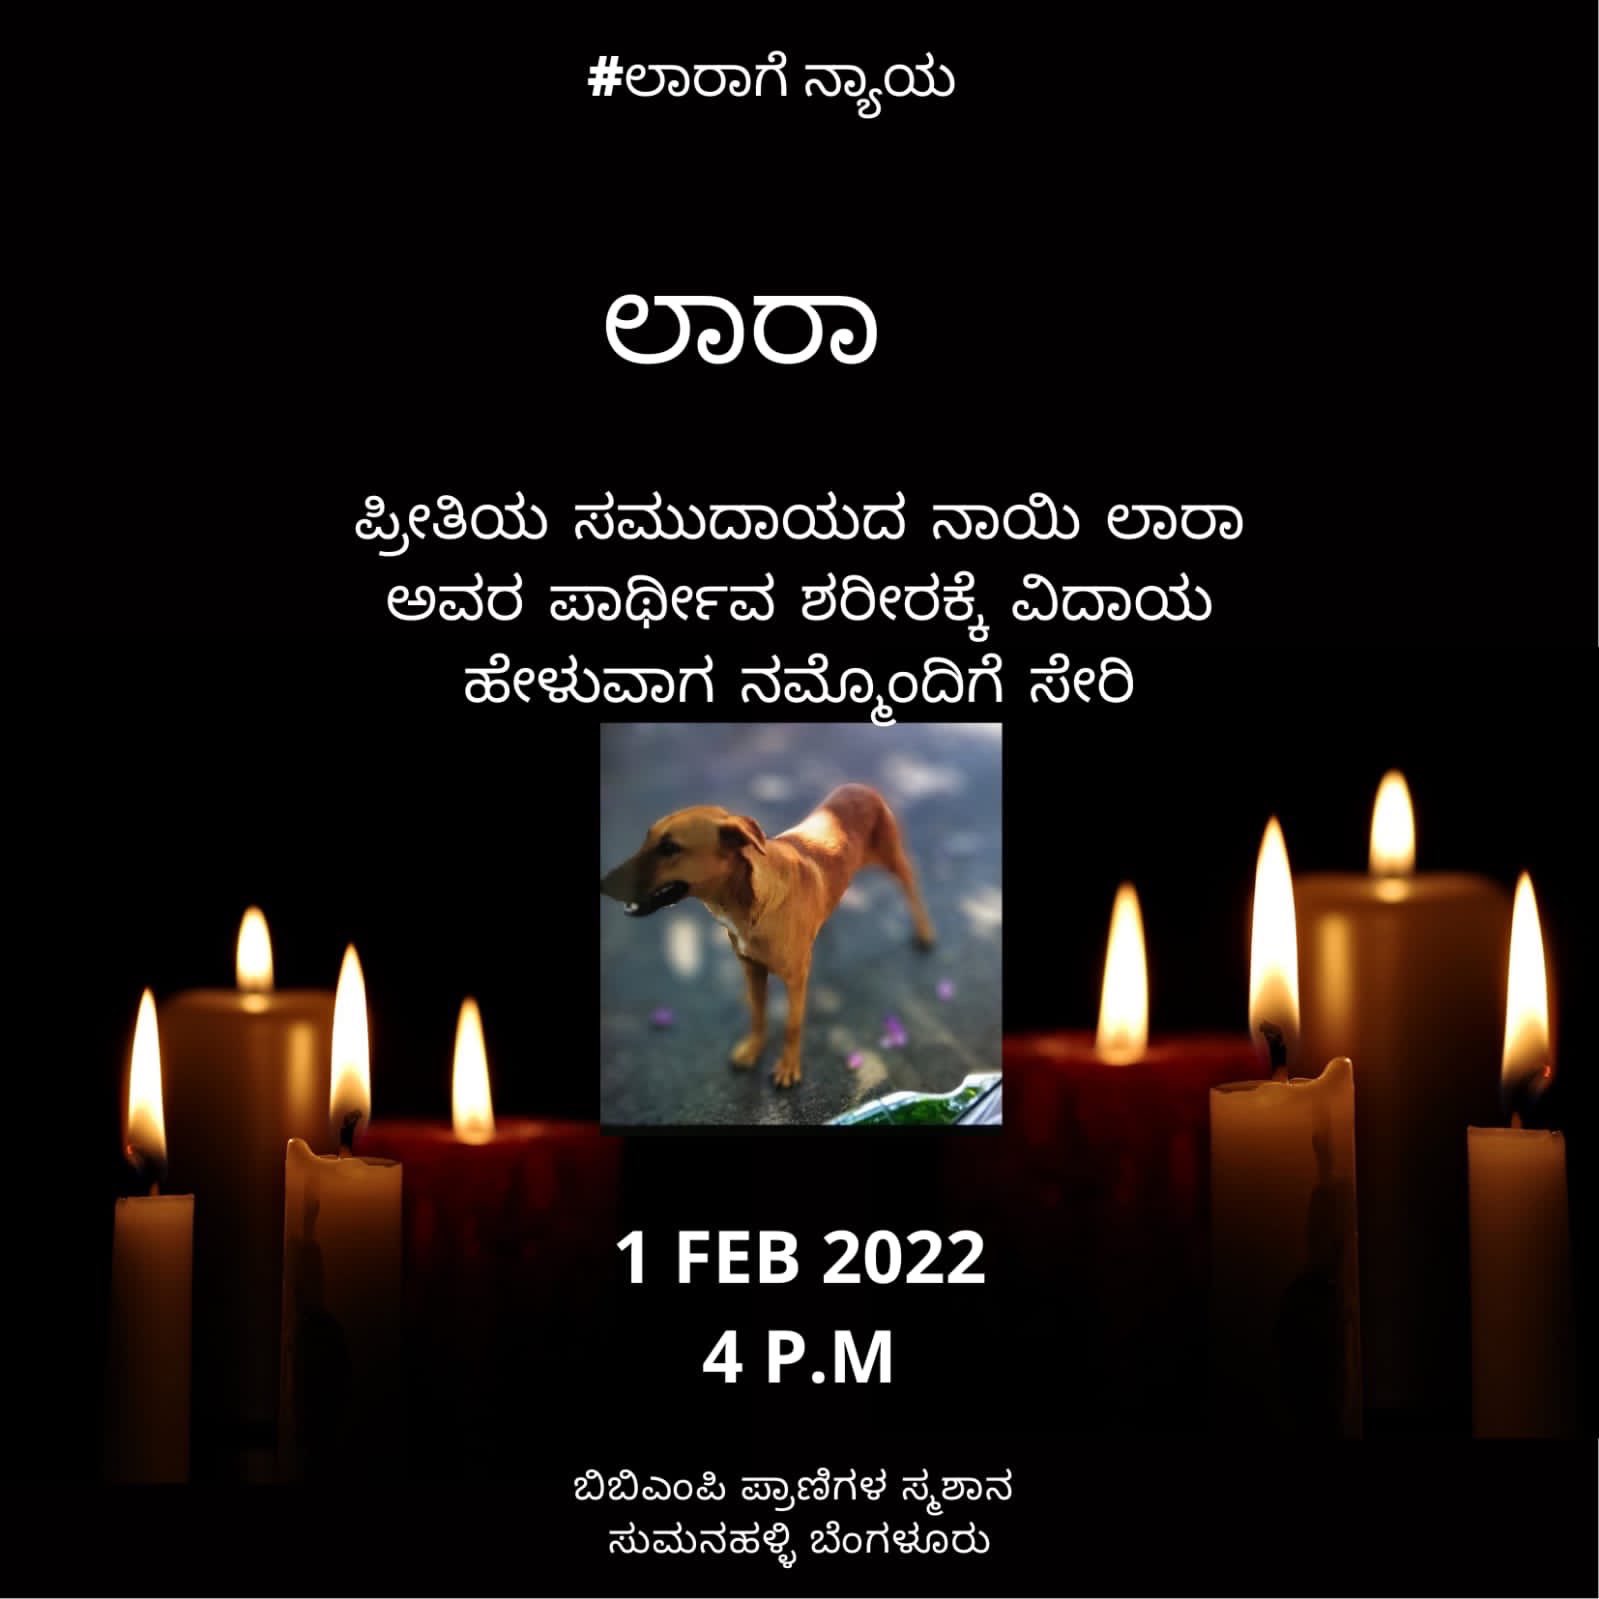 Funeral of dog held under actress Ramya